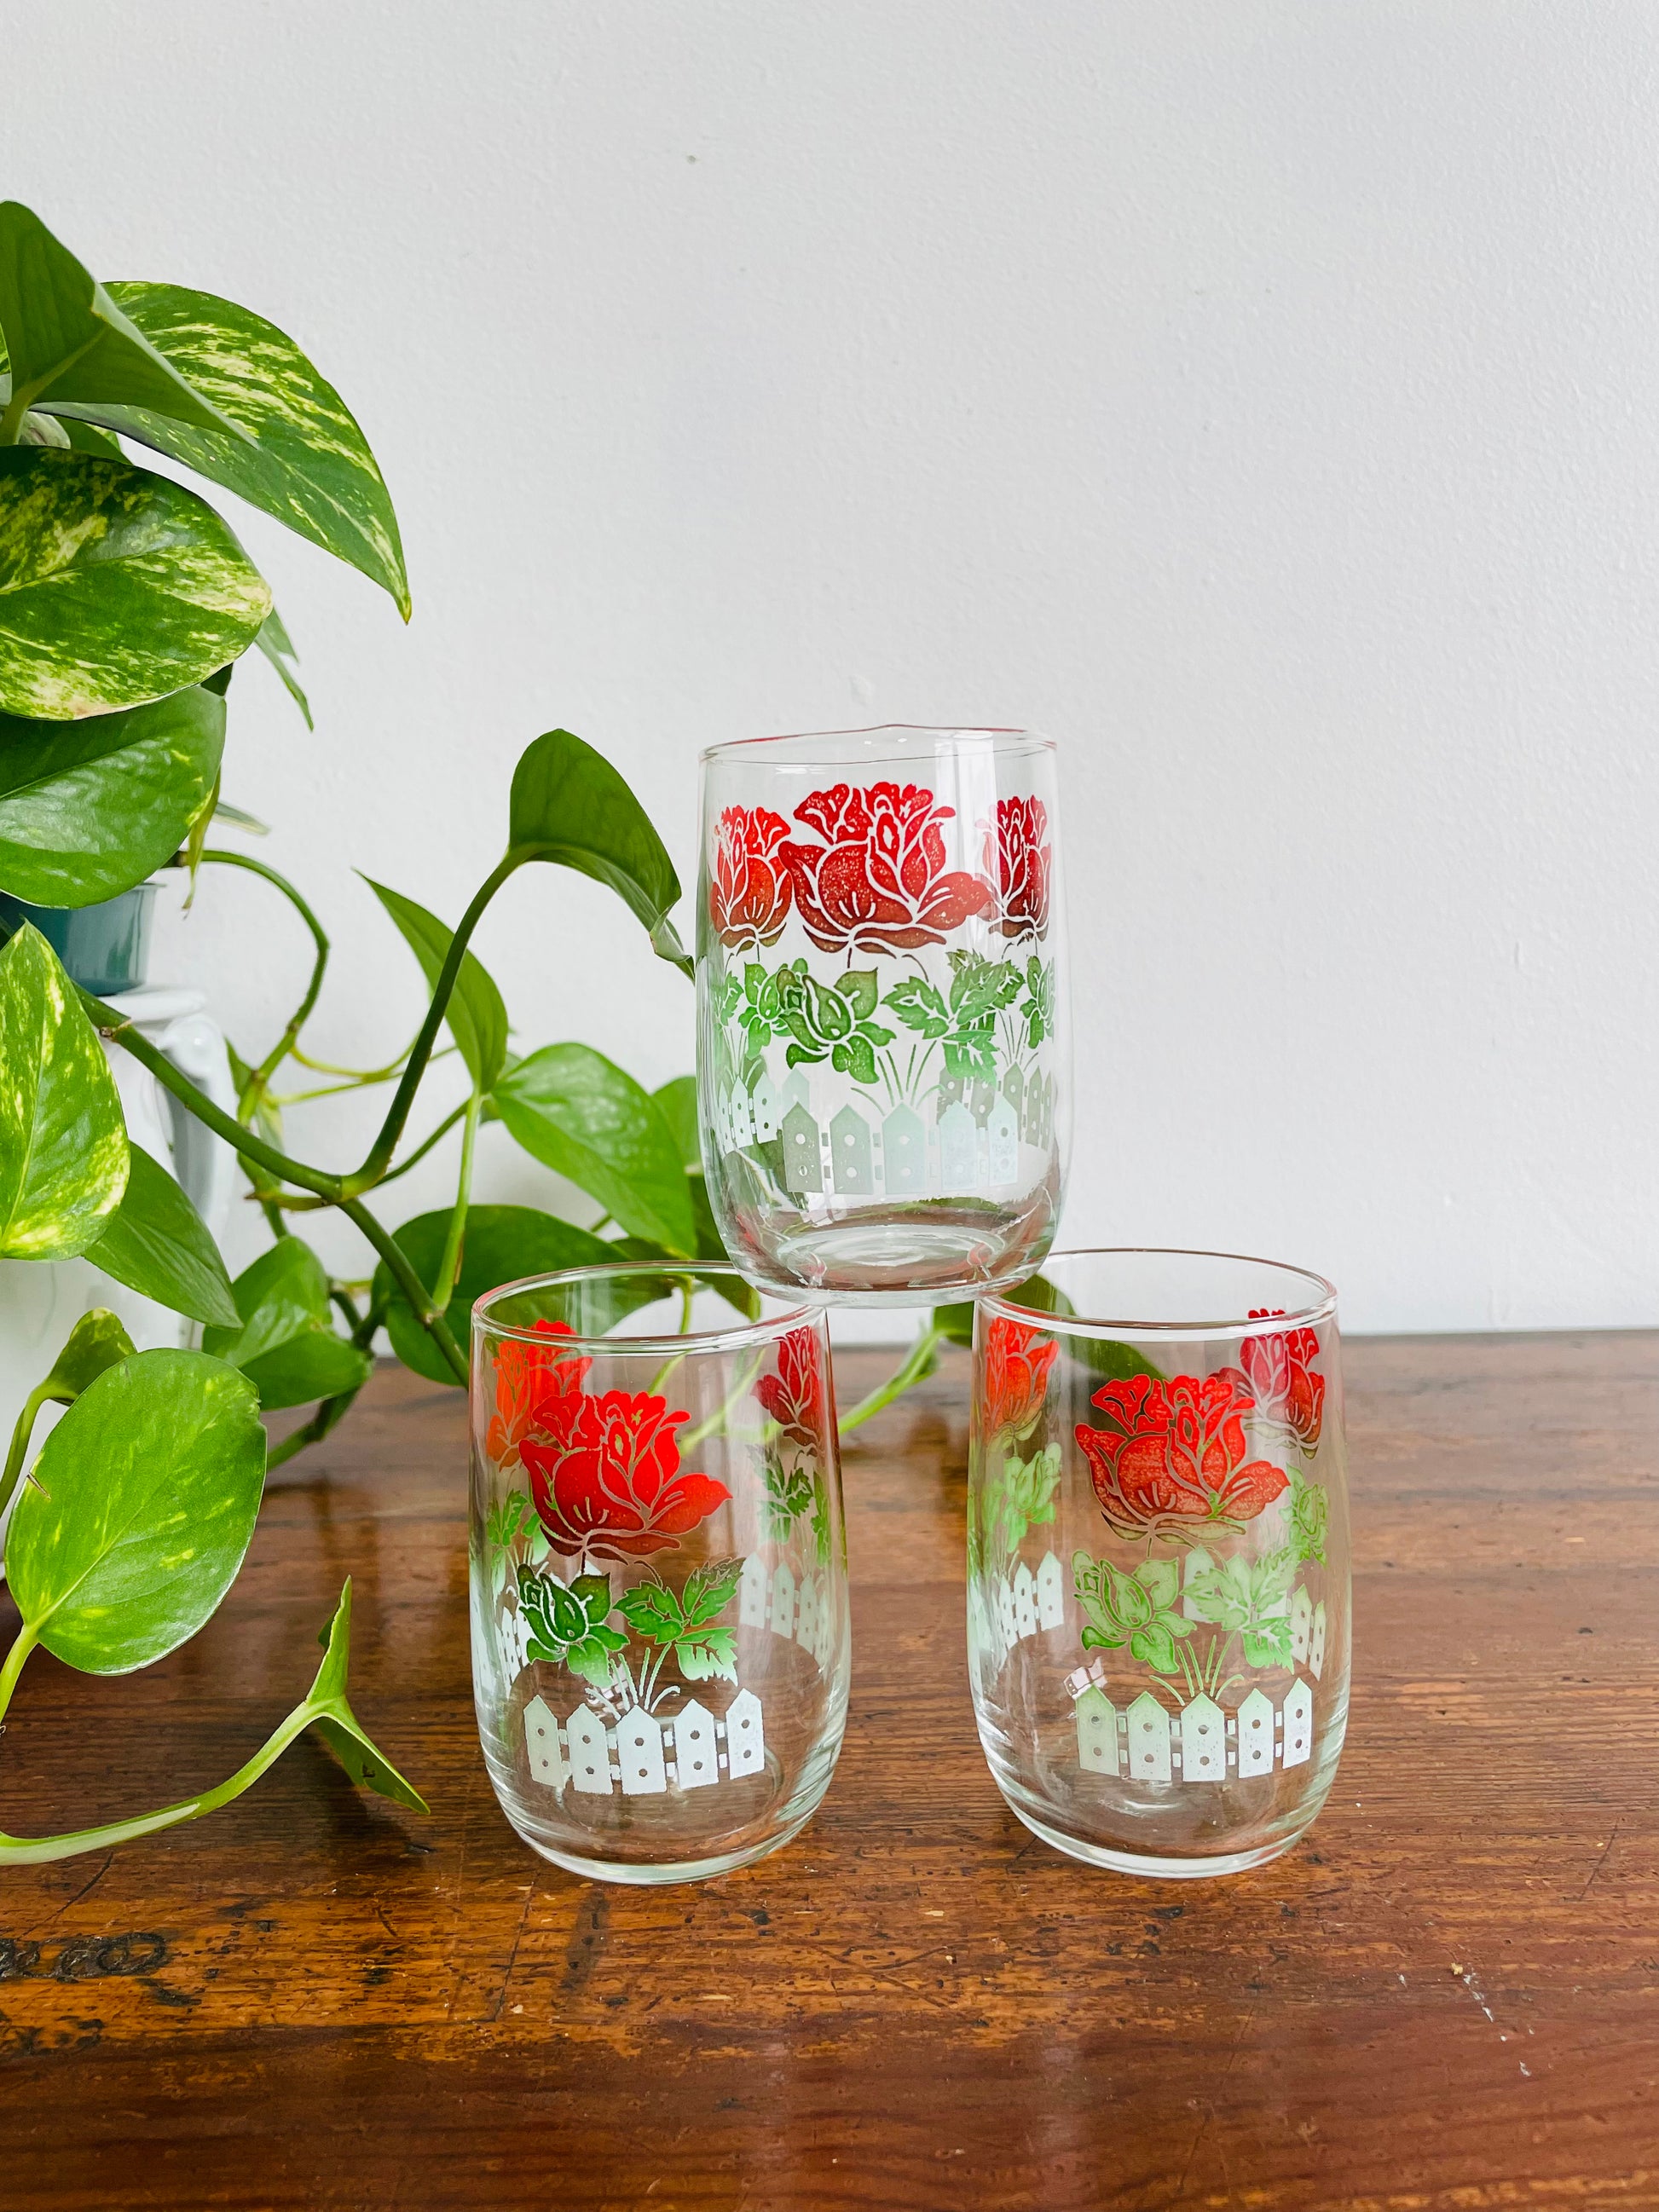 Vintage Juice Glasses, Libbey White Rose Glassware, Set of 8 